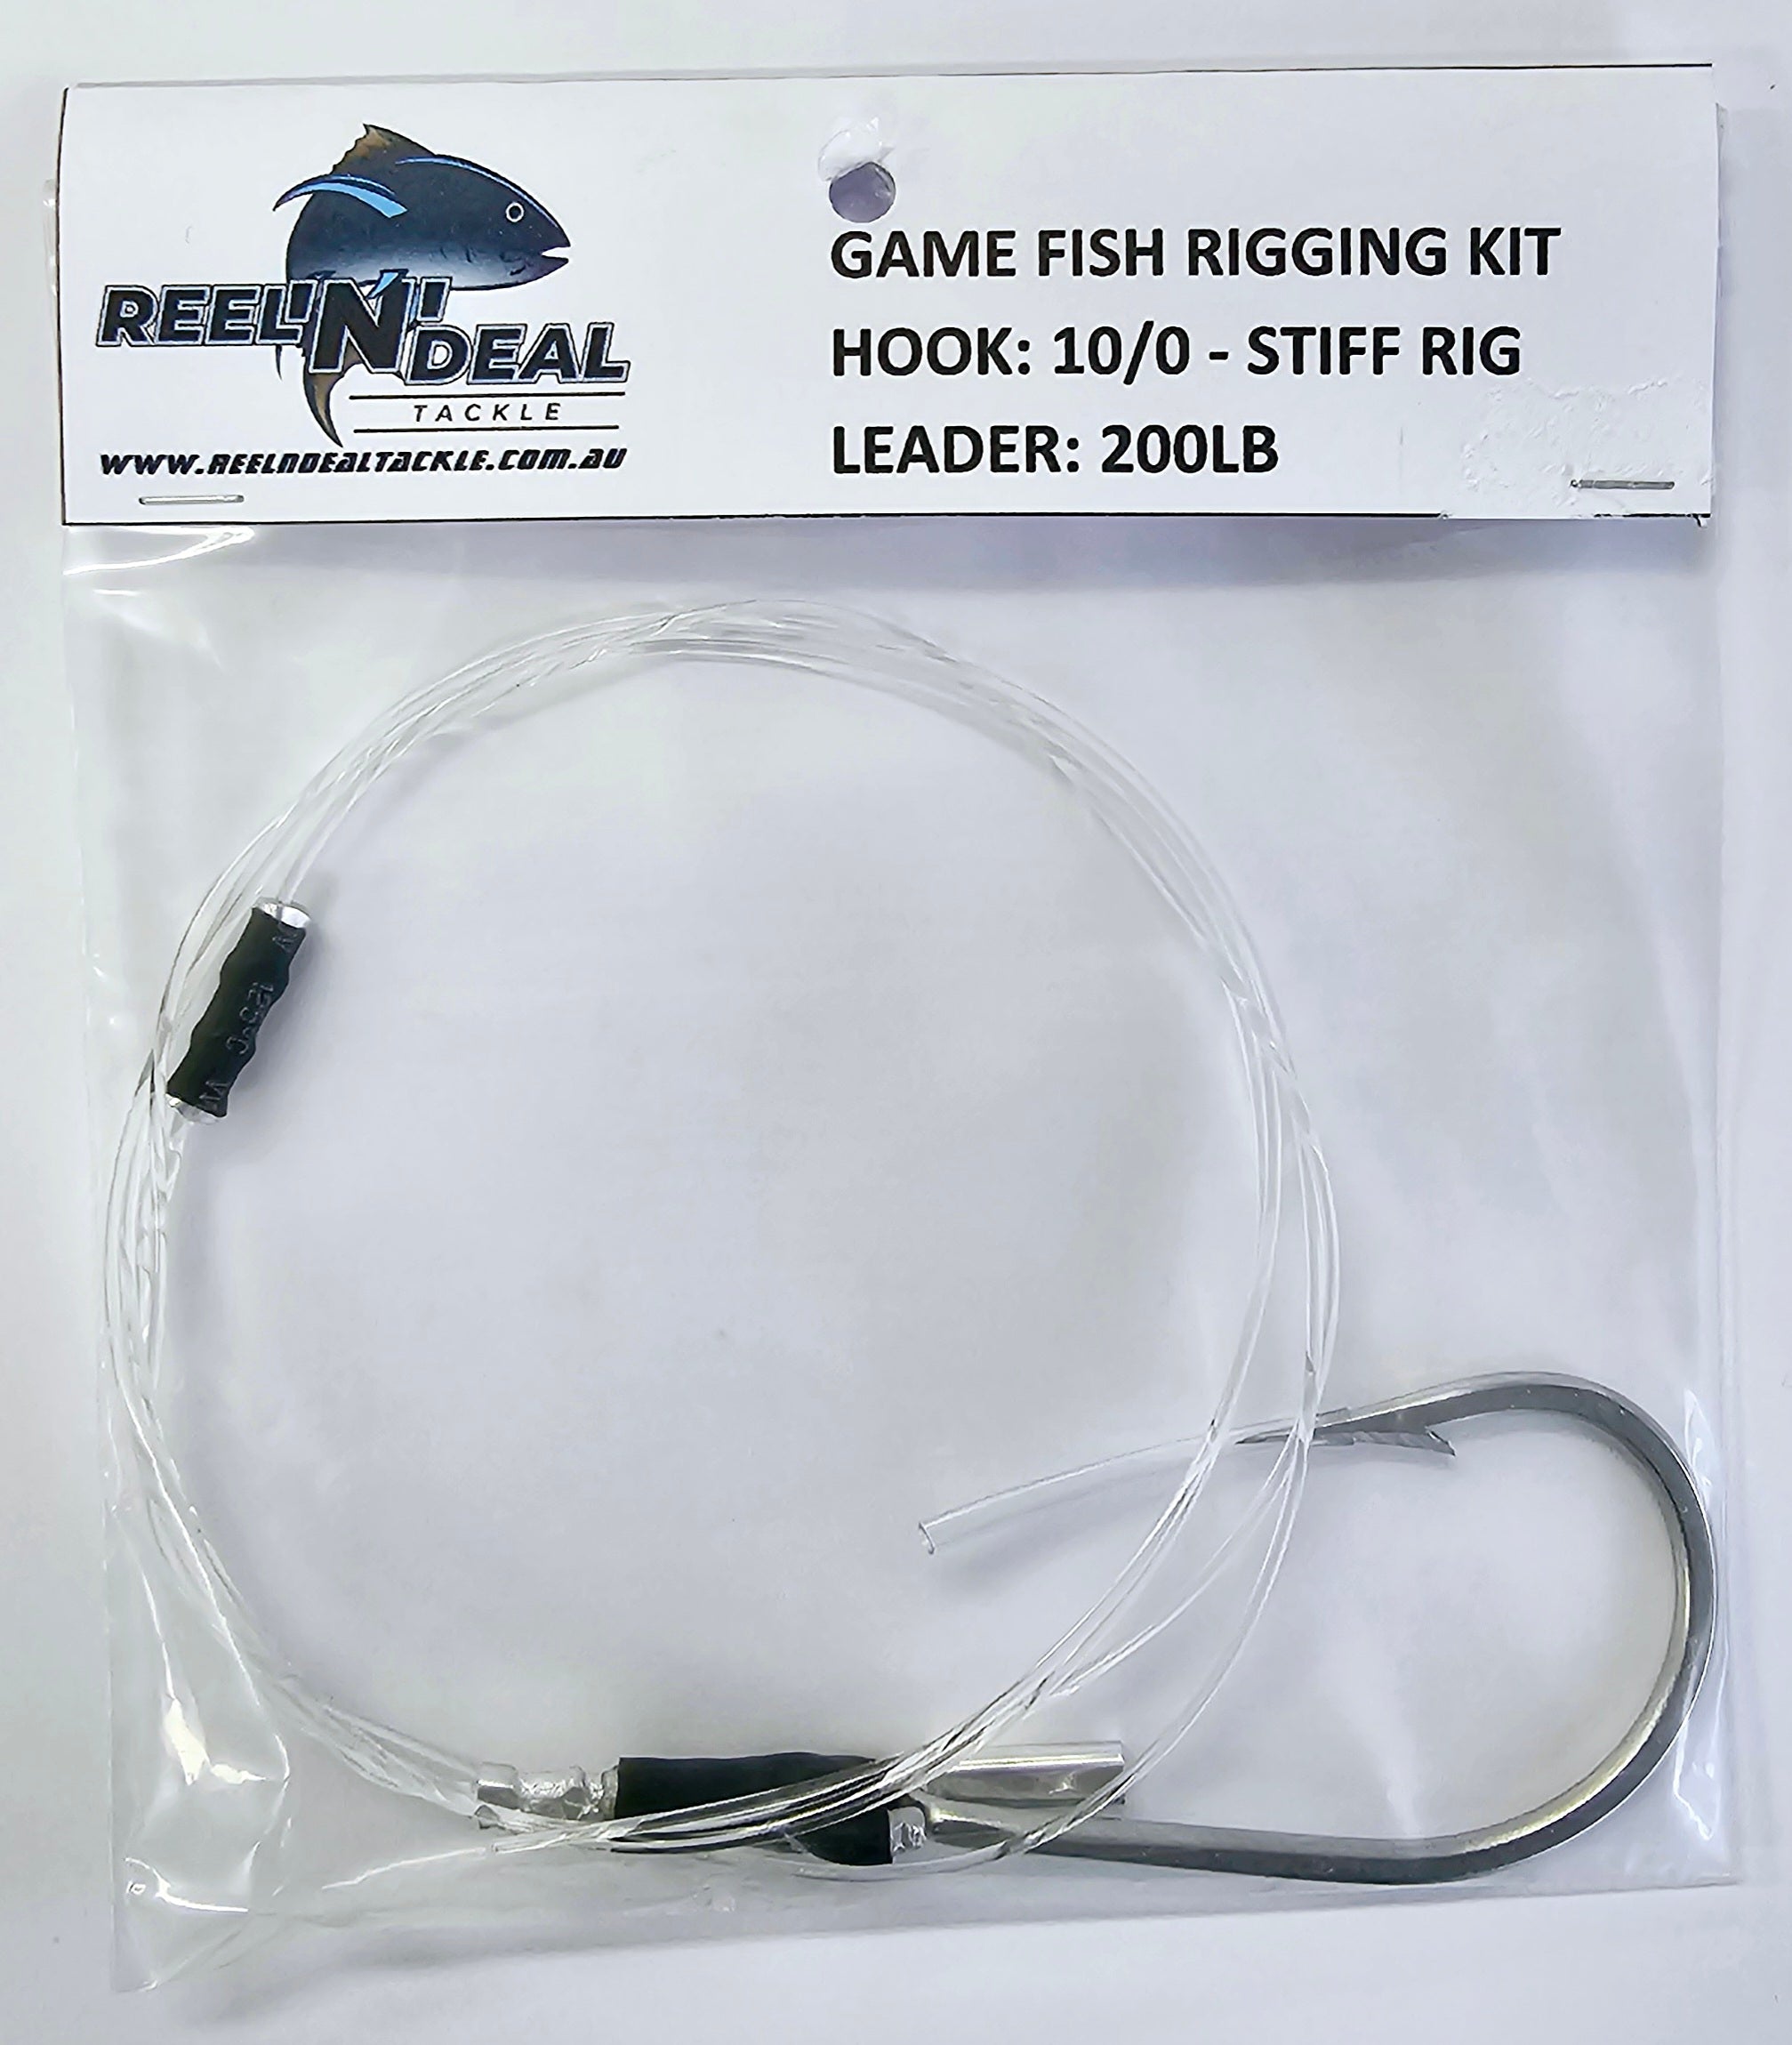 Tuna Rigging Pack 10/0 Stiff Rig Hook 200lb leader – REEL 'N' DEAL